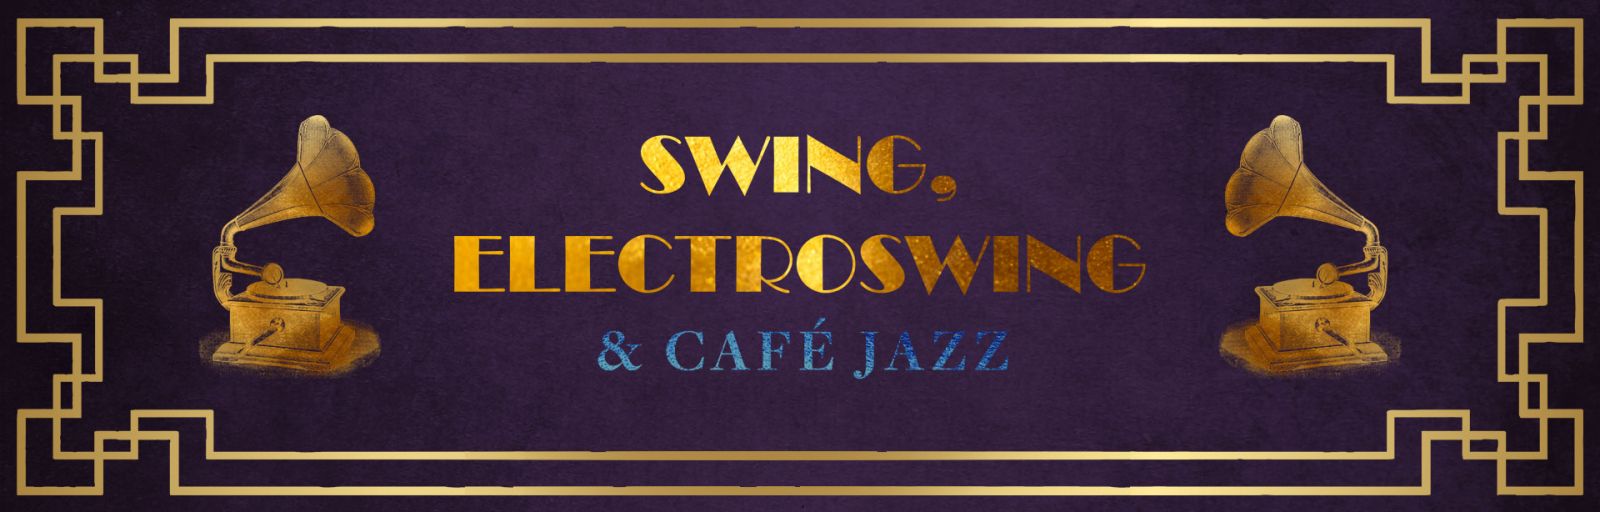 Swing, Electroswing & Café Jazz album